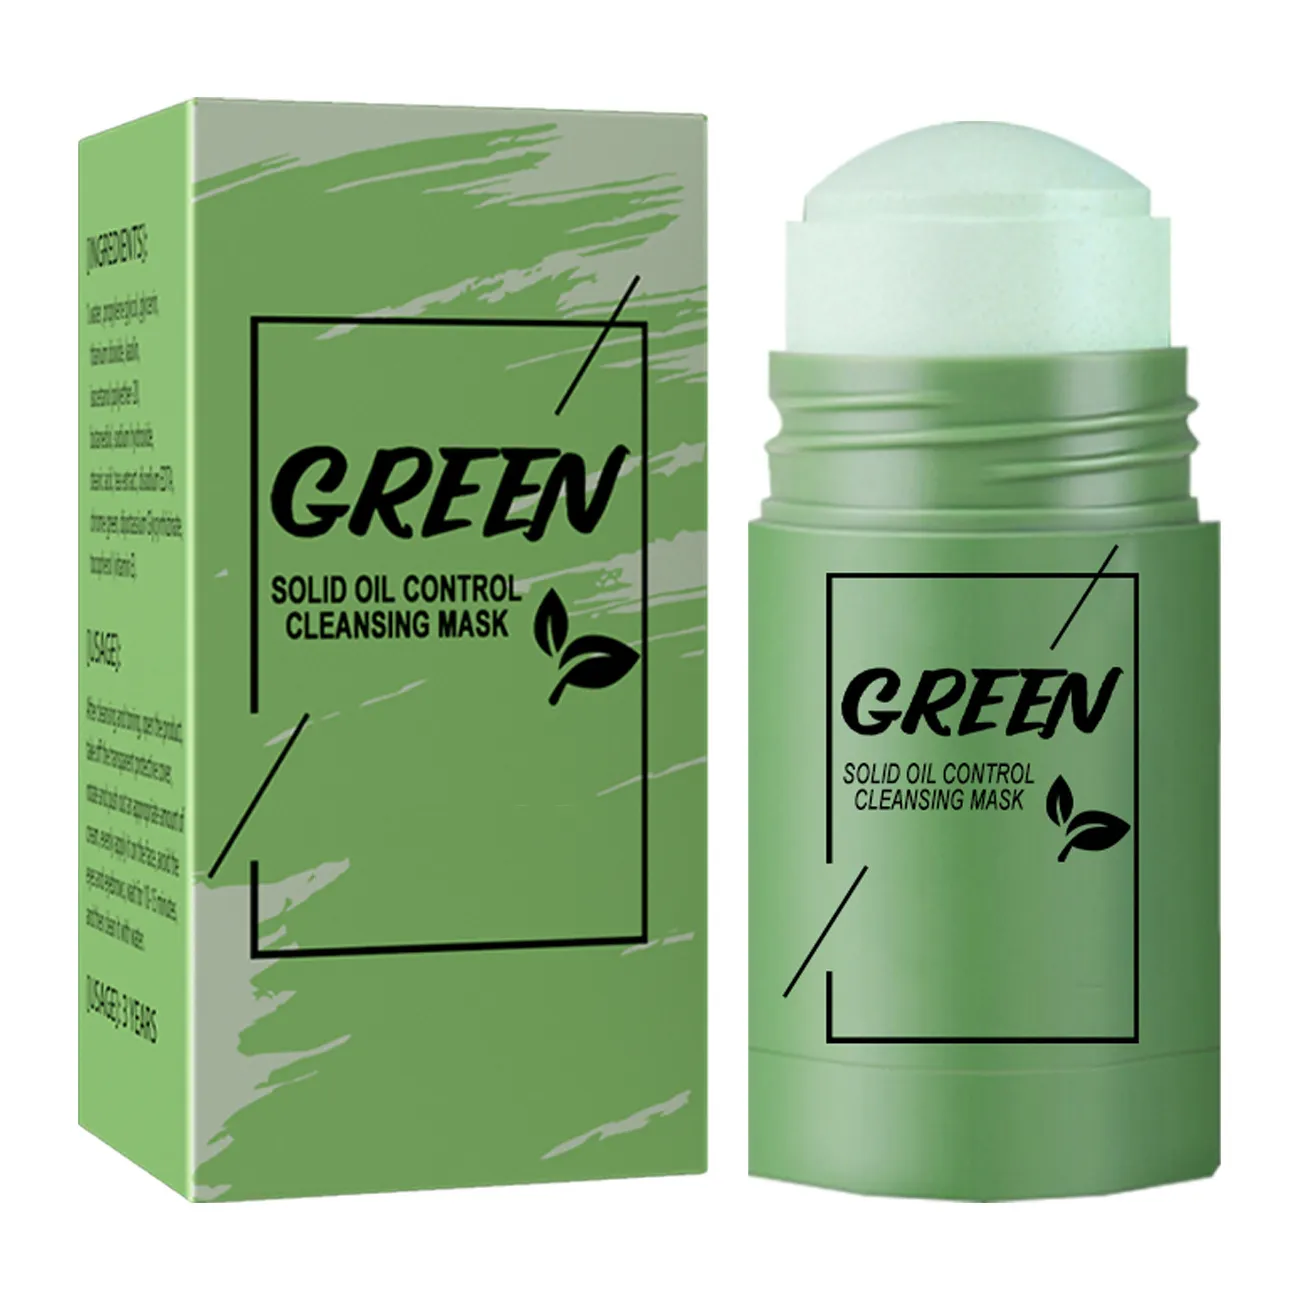 Maschera al tè verde all'ingrosso Stick maschera di fango alla vitamina C Stick maschera facciale all'argilla per la pulizia profonda